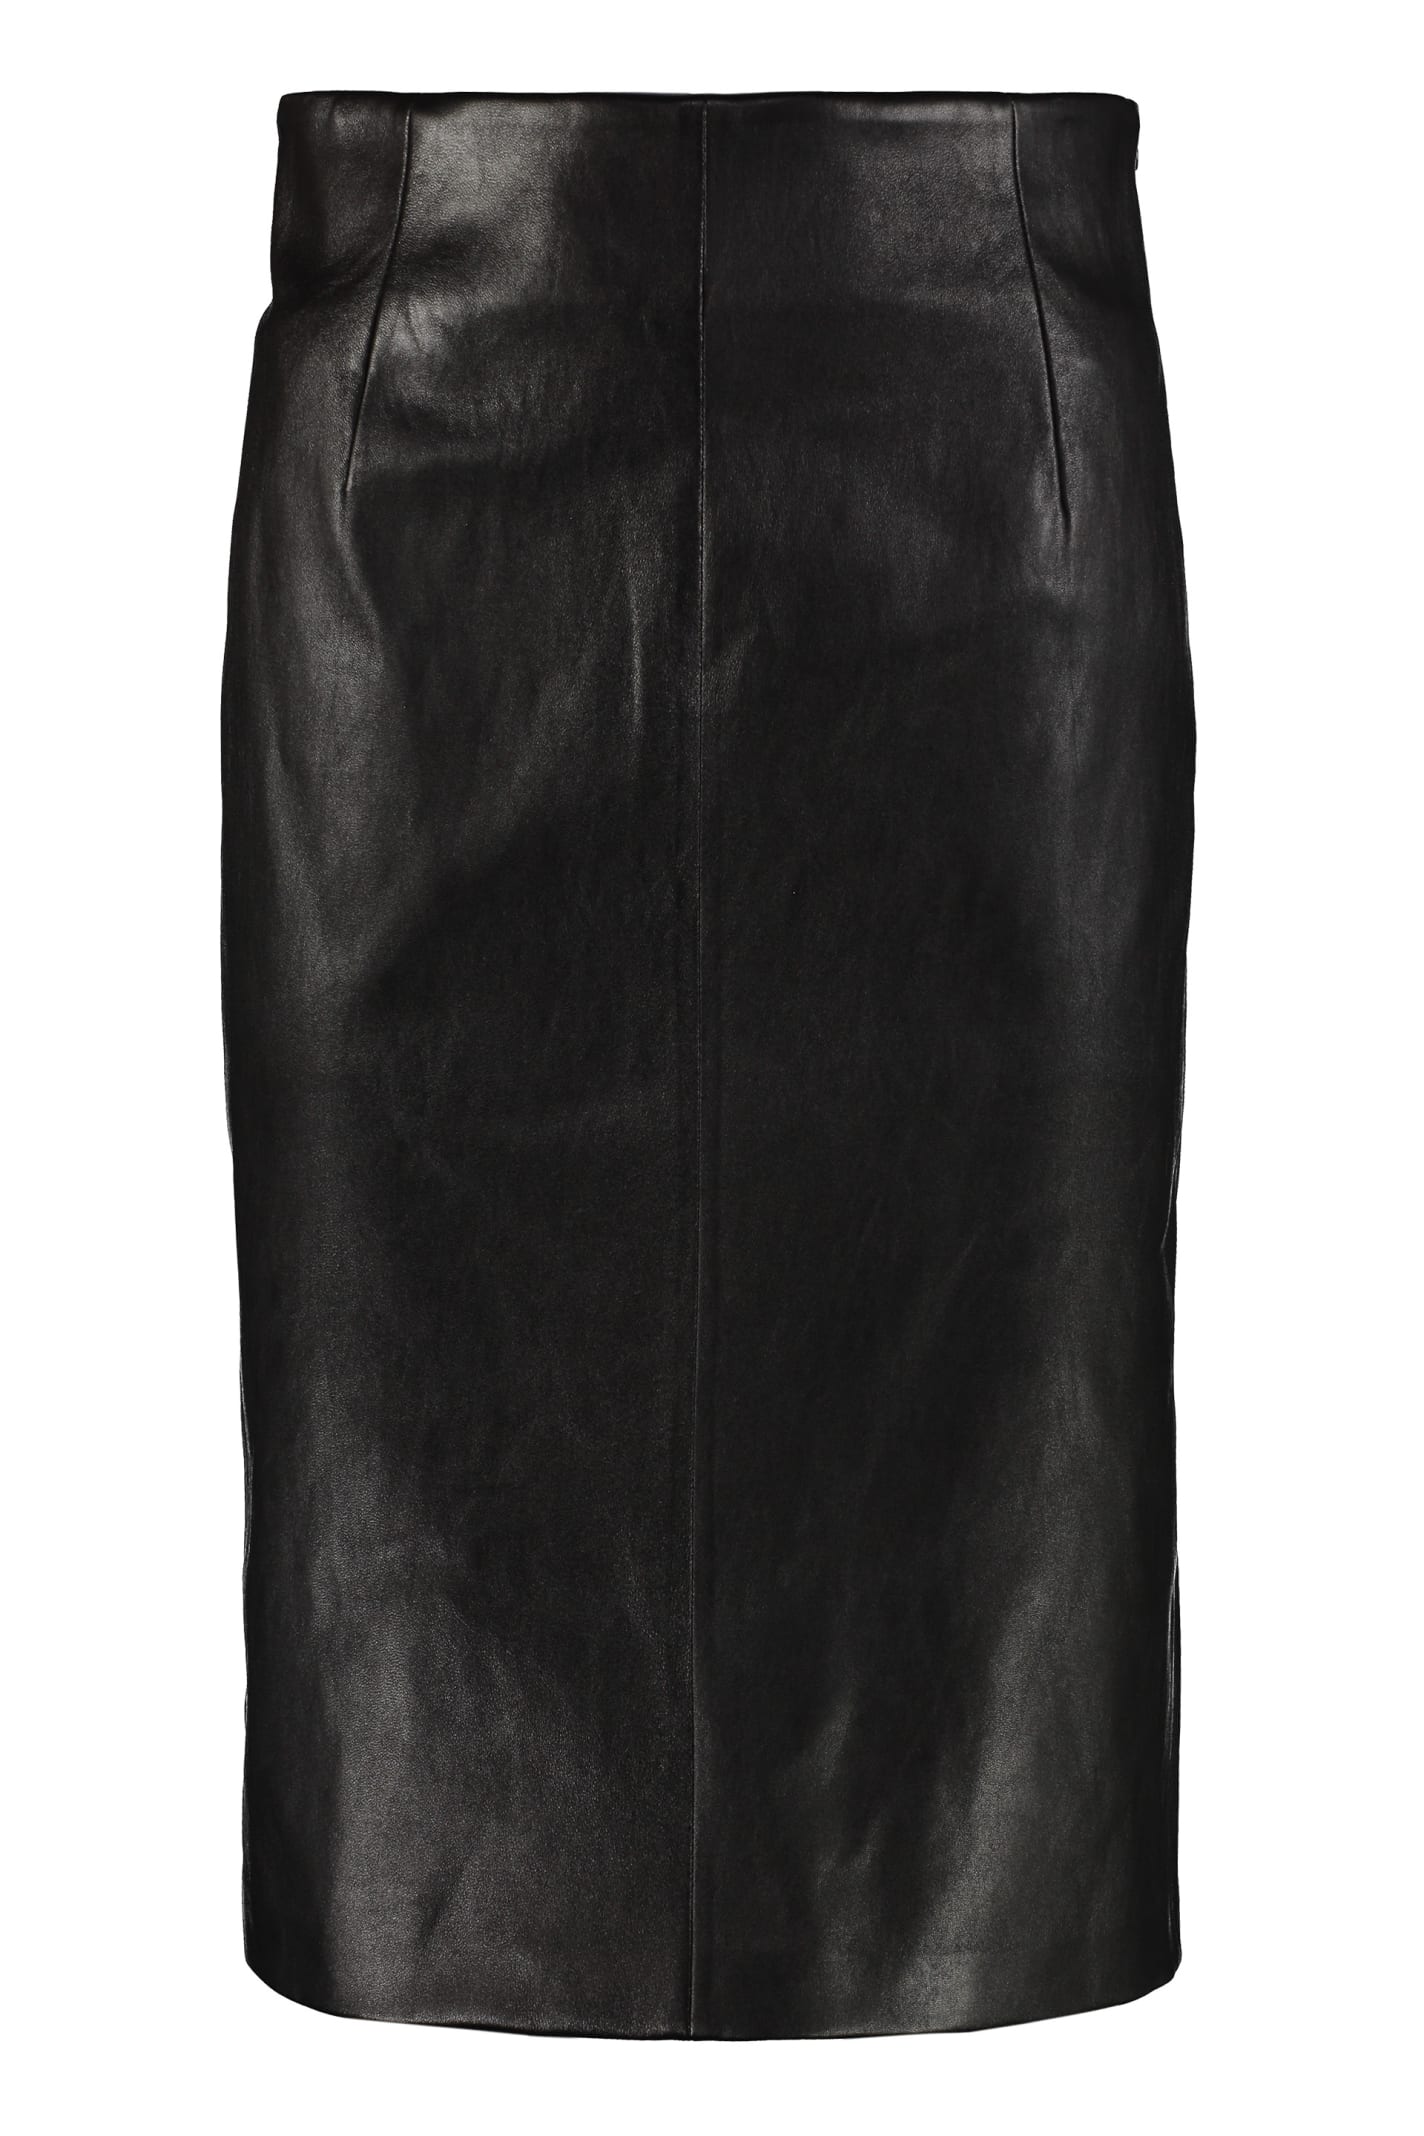 Prada Pencil Skirt With Zip In Black | ModeSens